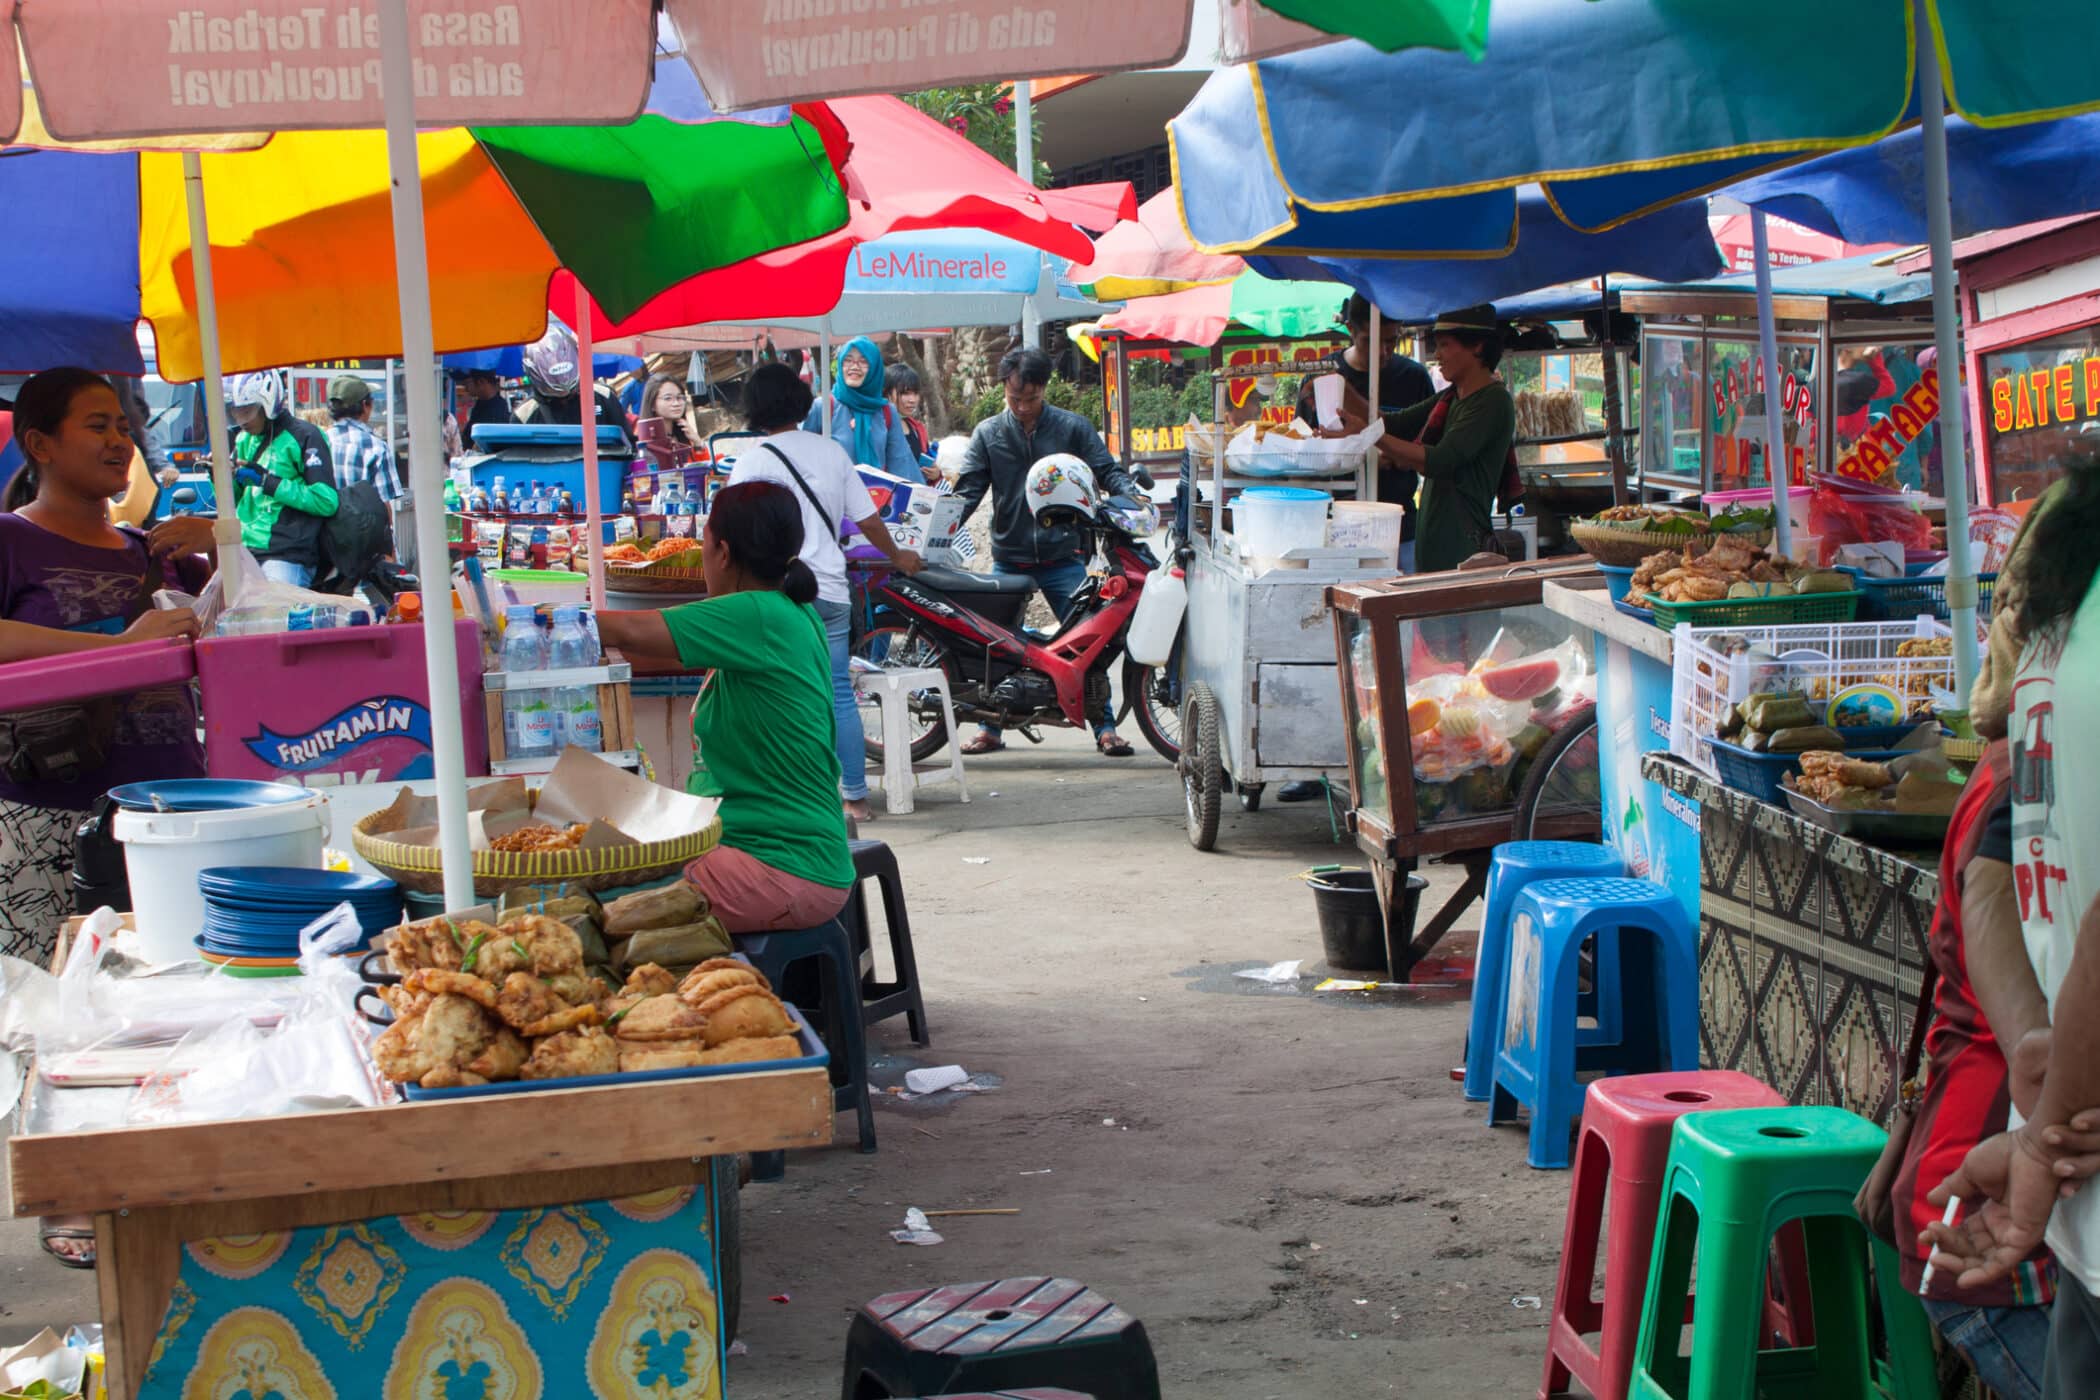 Street food vendor in Jakarta Indonesia. people selling in cart, mad i asien